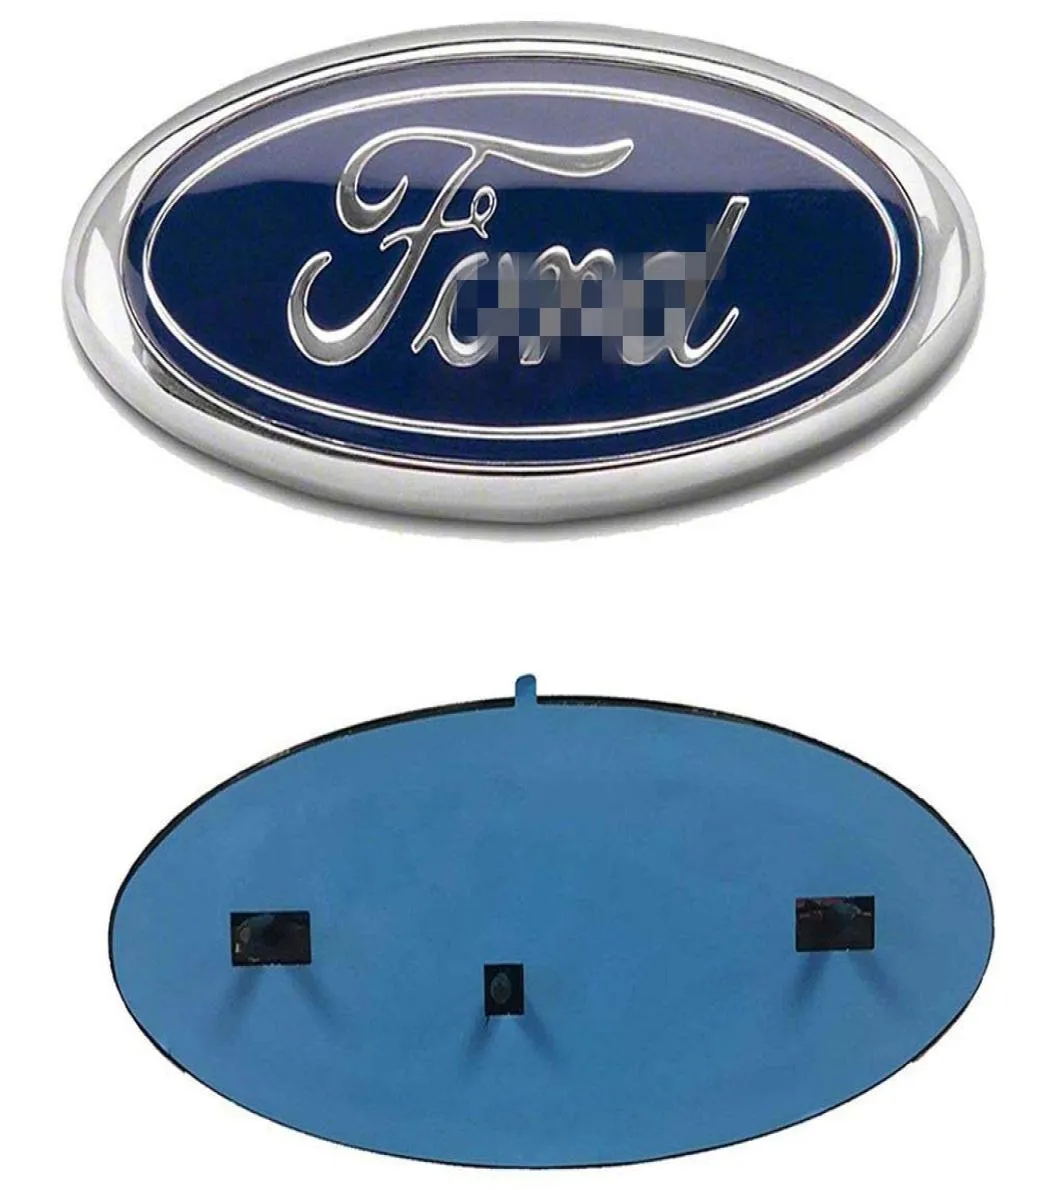 20042014 Ford F150 Front Grille Tailgate Emblem Oval 9Quotx35quot Decal Badge Namnplatta passar ocks￥ f￶r F250 F350 Edge Explo1898637